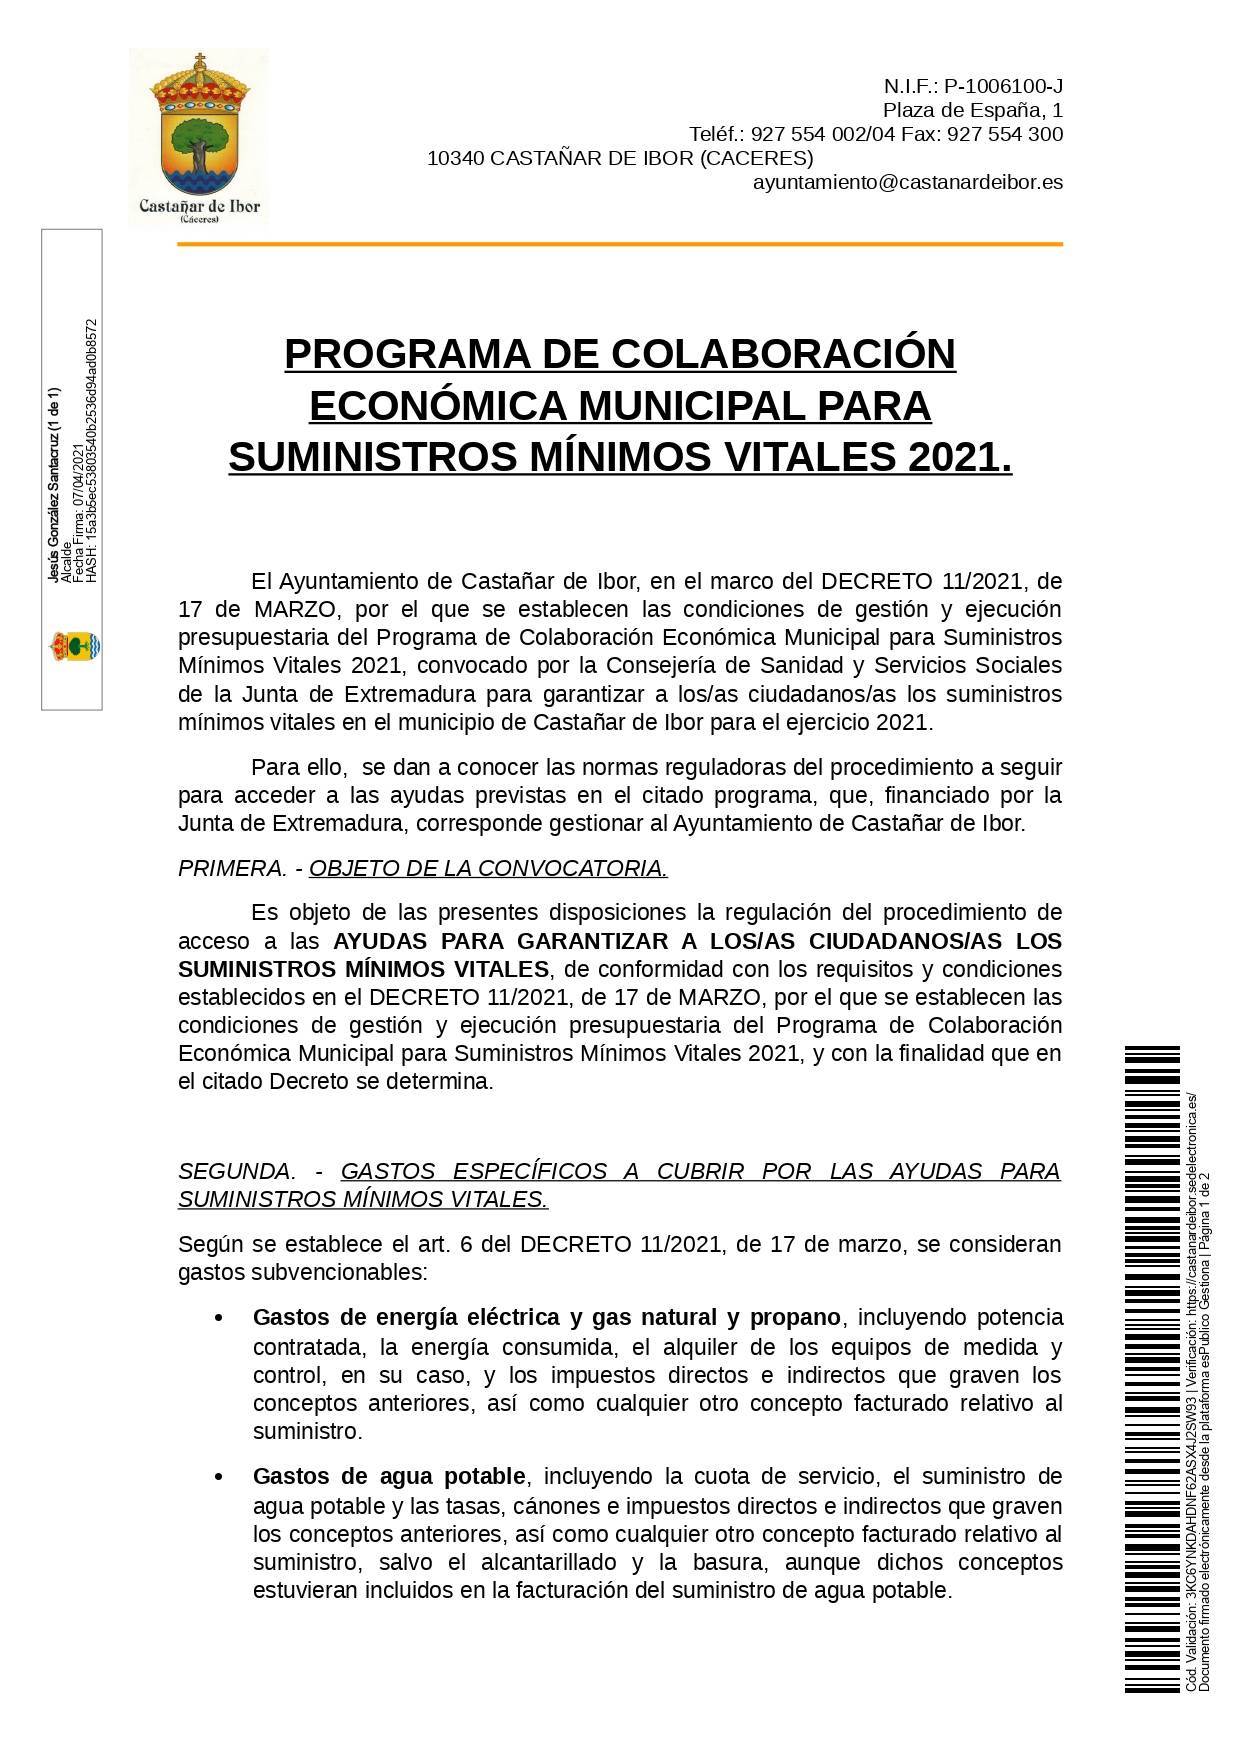 Ayuda económica municipal para suministros mínimos vitales (2021) - Castañar de Ibor (Cáceres) 1